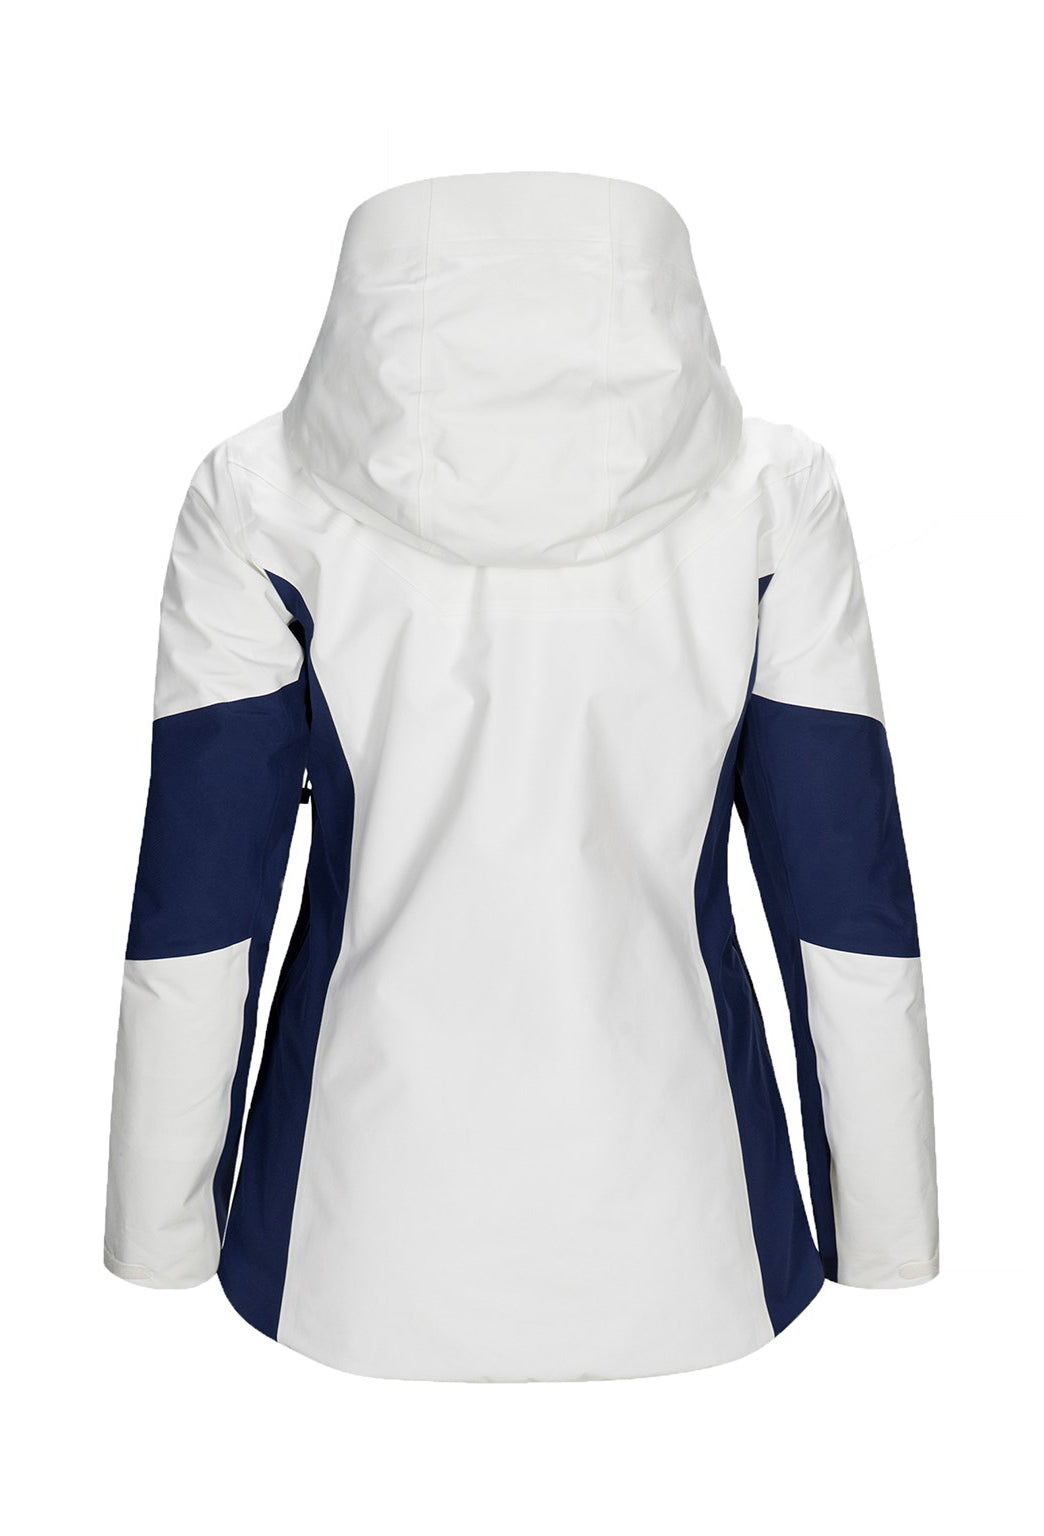 PEAK PERFORMANCE - Blue/White Snow Jacket